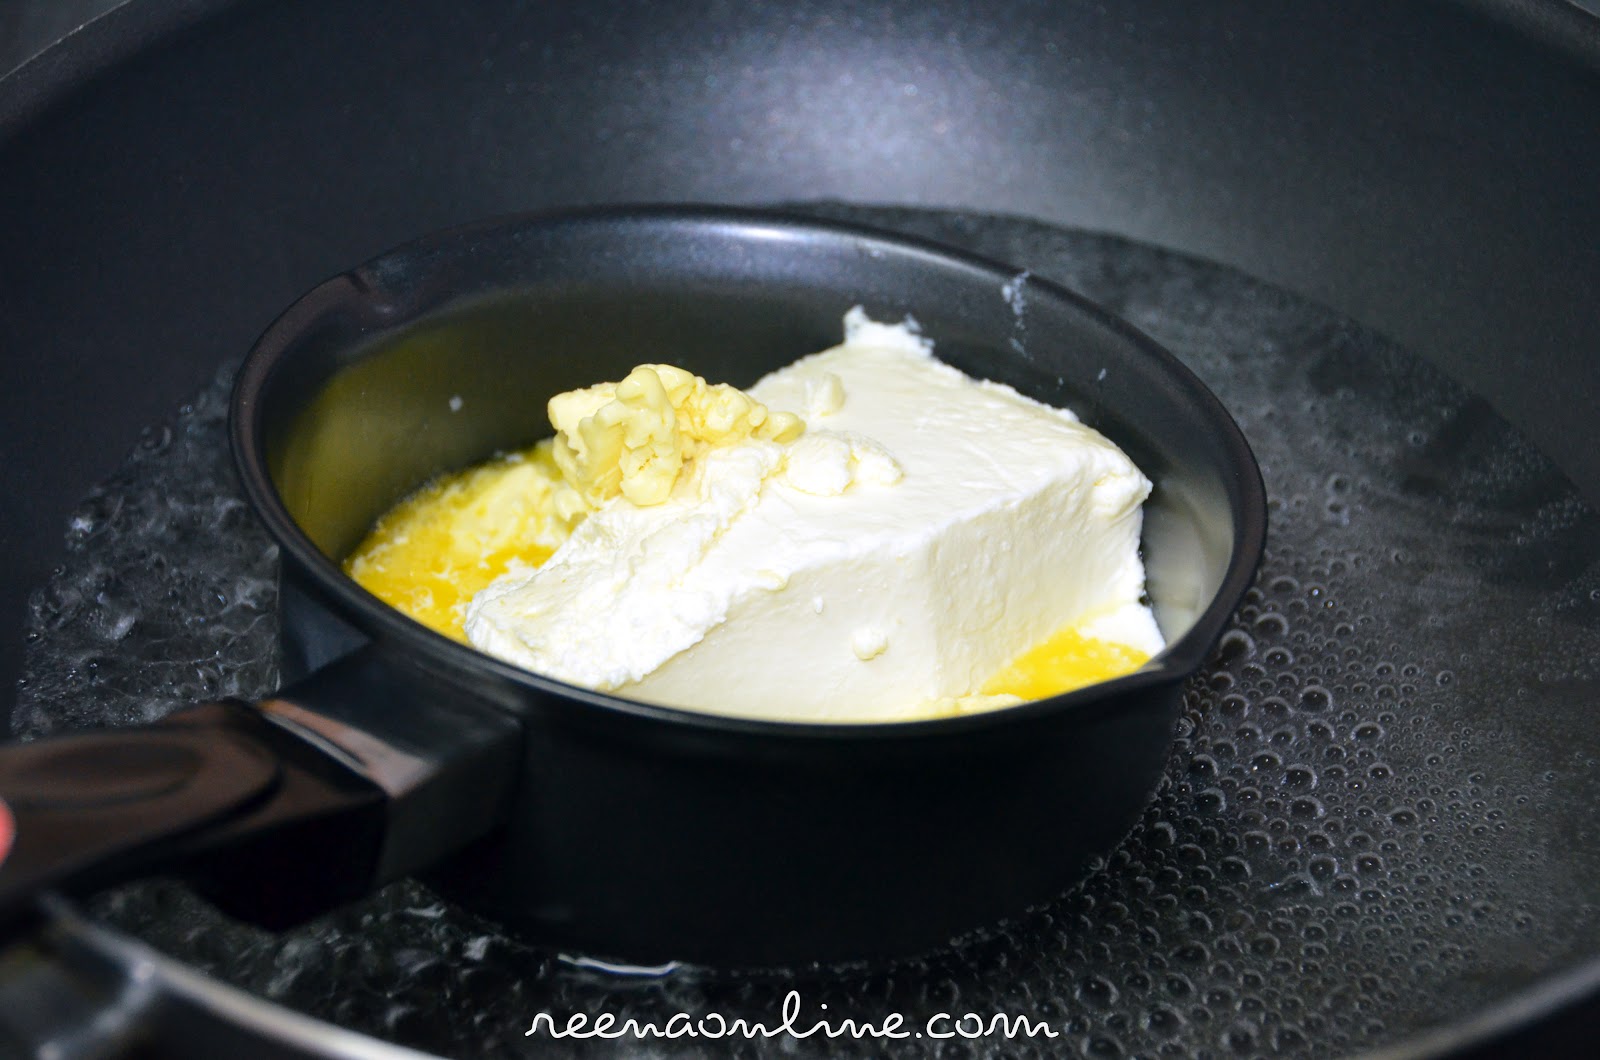 Reena's Online: Resepi : Kek Cotton Cheese / Cotton Cheesecake